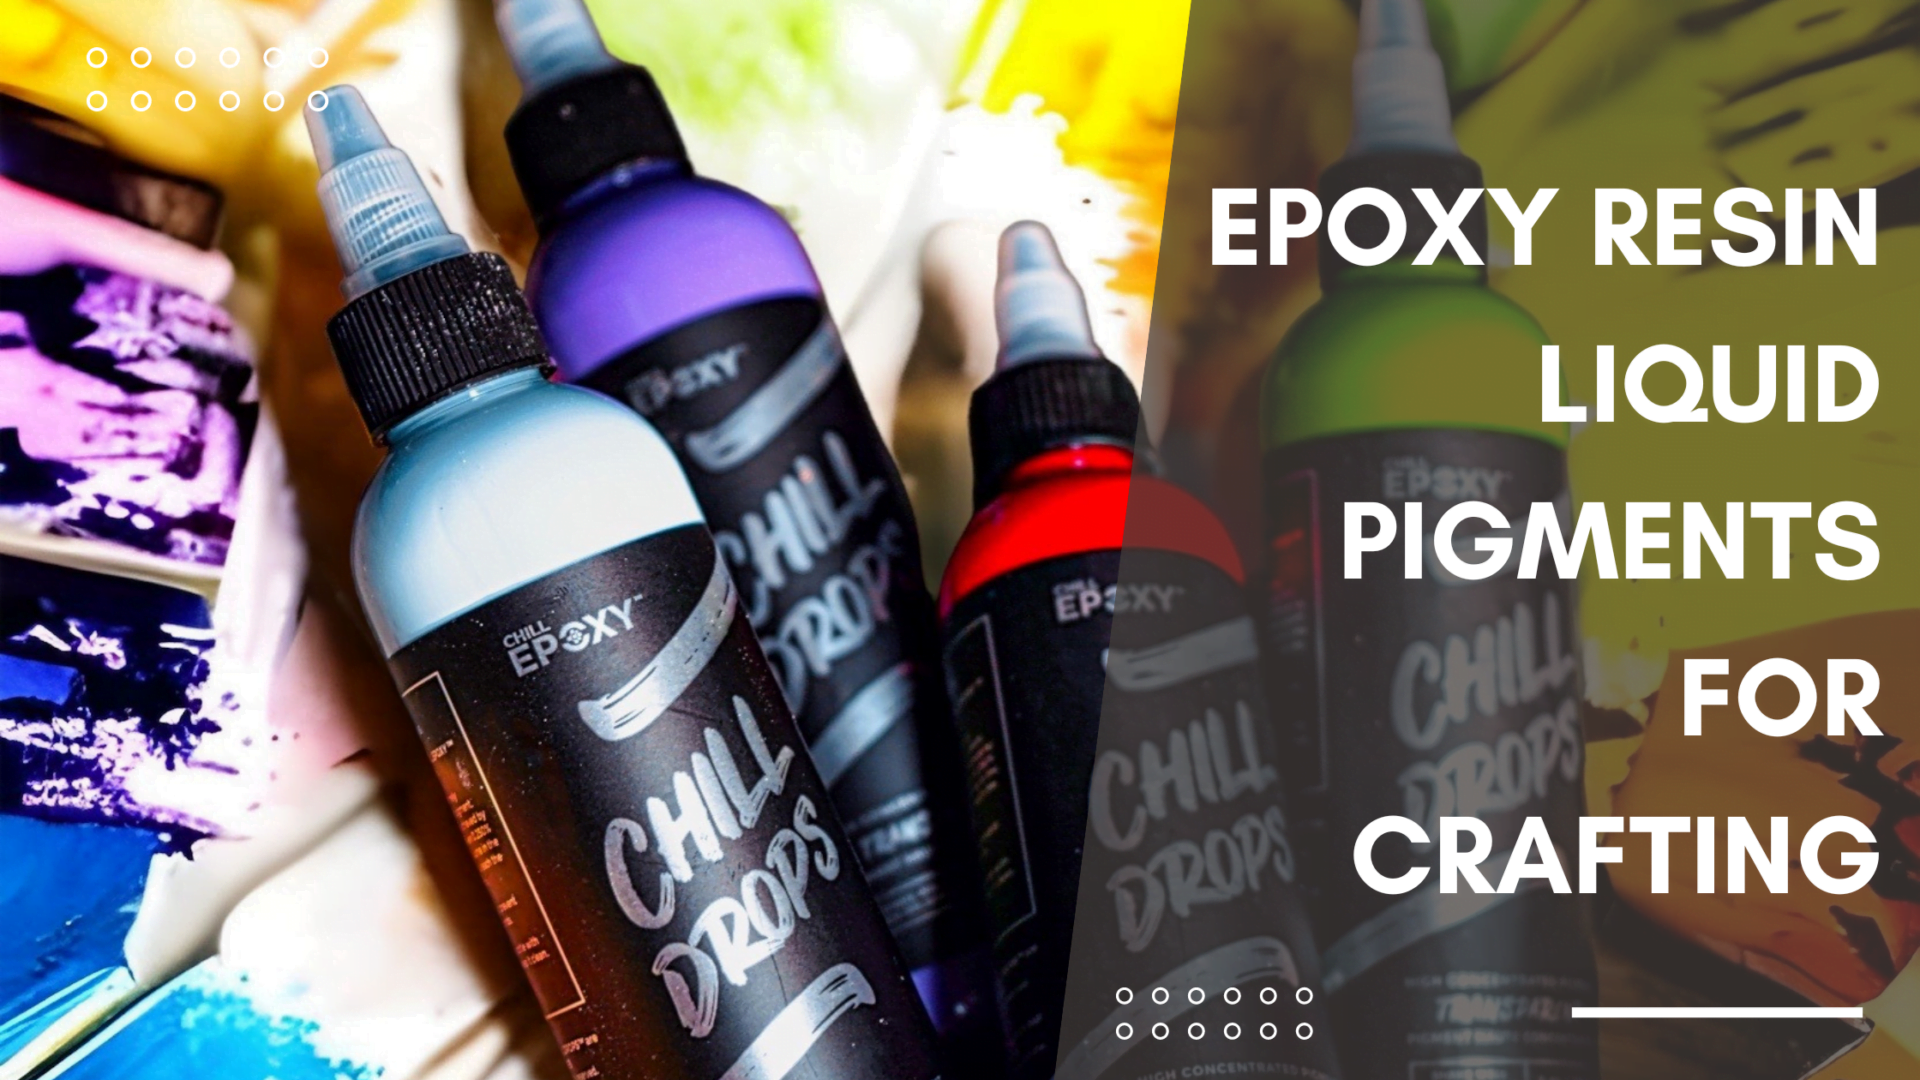 Epoxy Resin Liquid Pigments for Crafting CHILL EPOXY